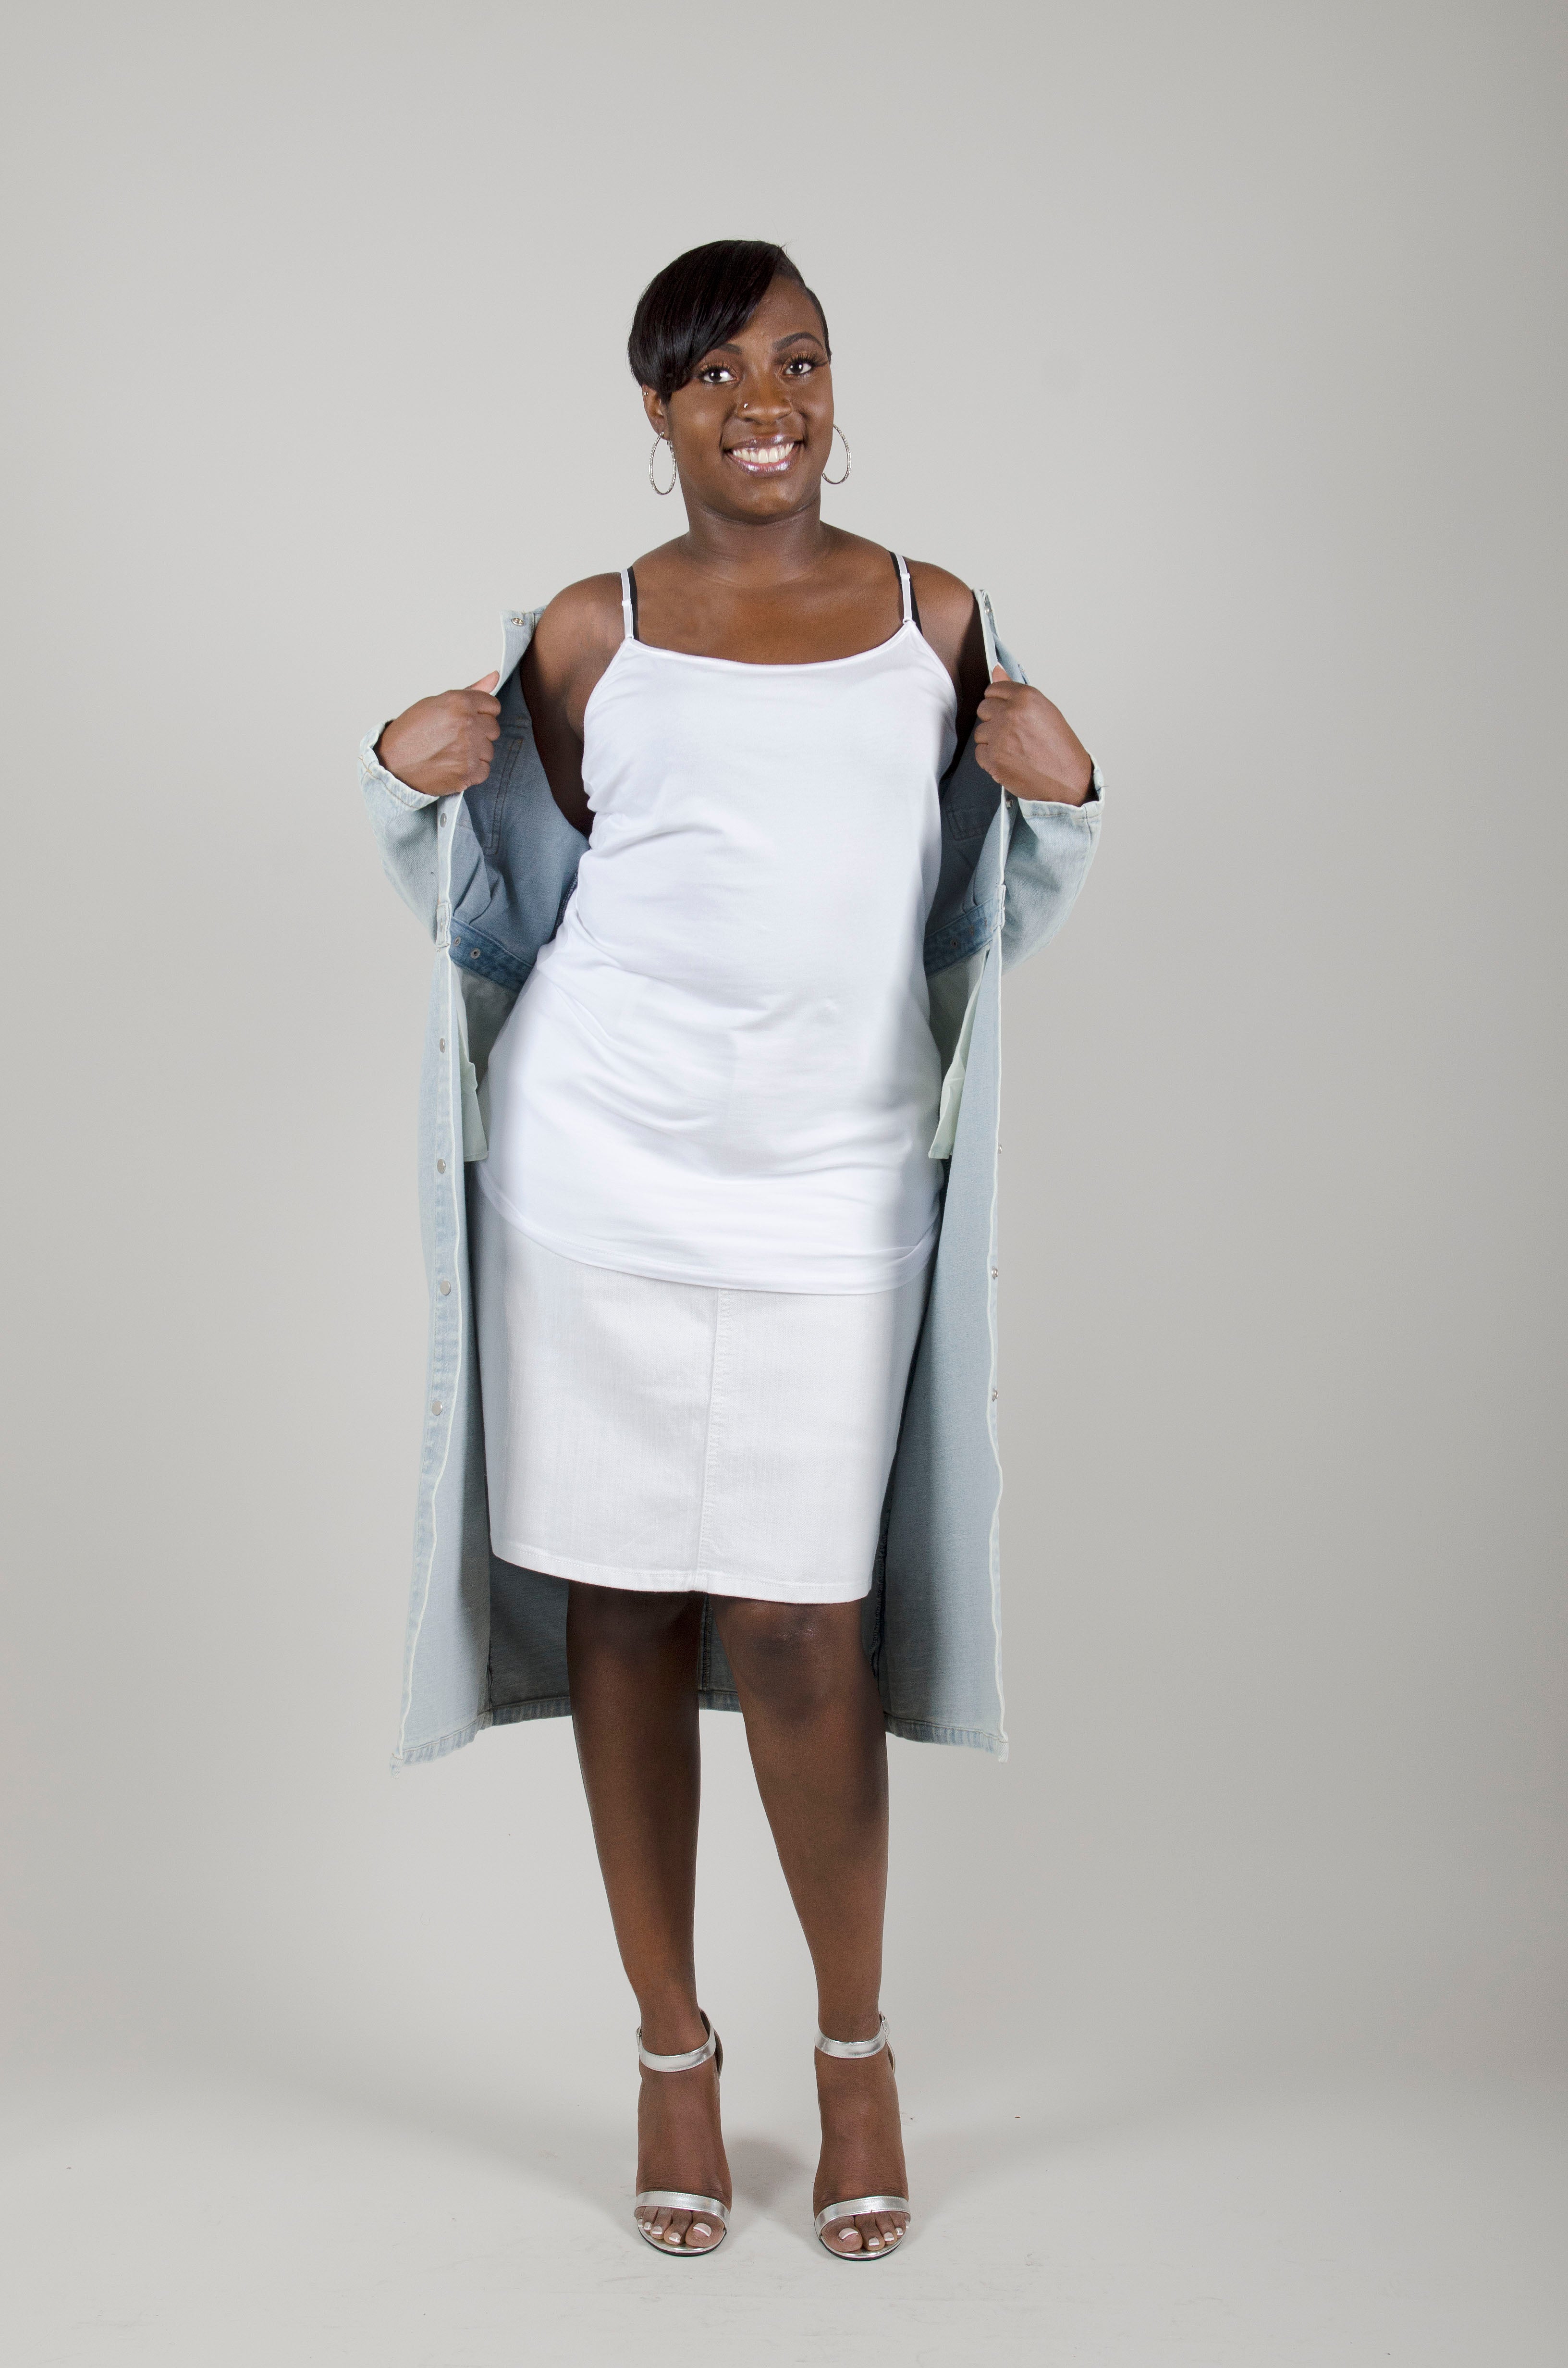 Buy StyleStone Women's Denim Distressed Strip Knee-Length Skirt (Blue,  Small) at Amazon.in